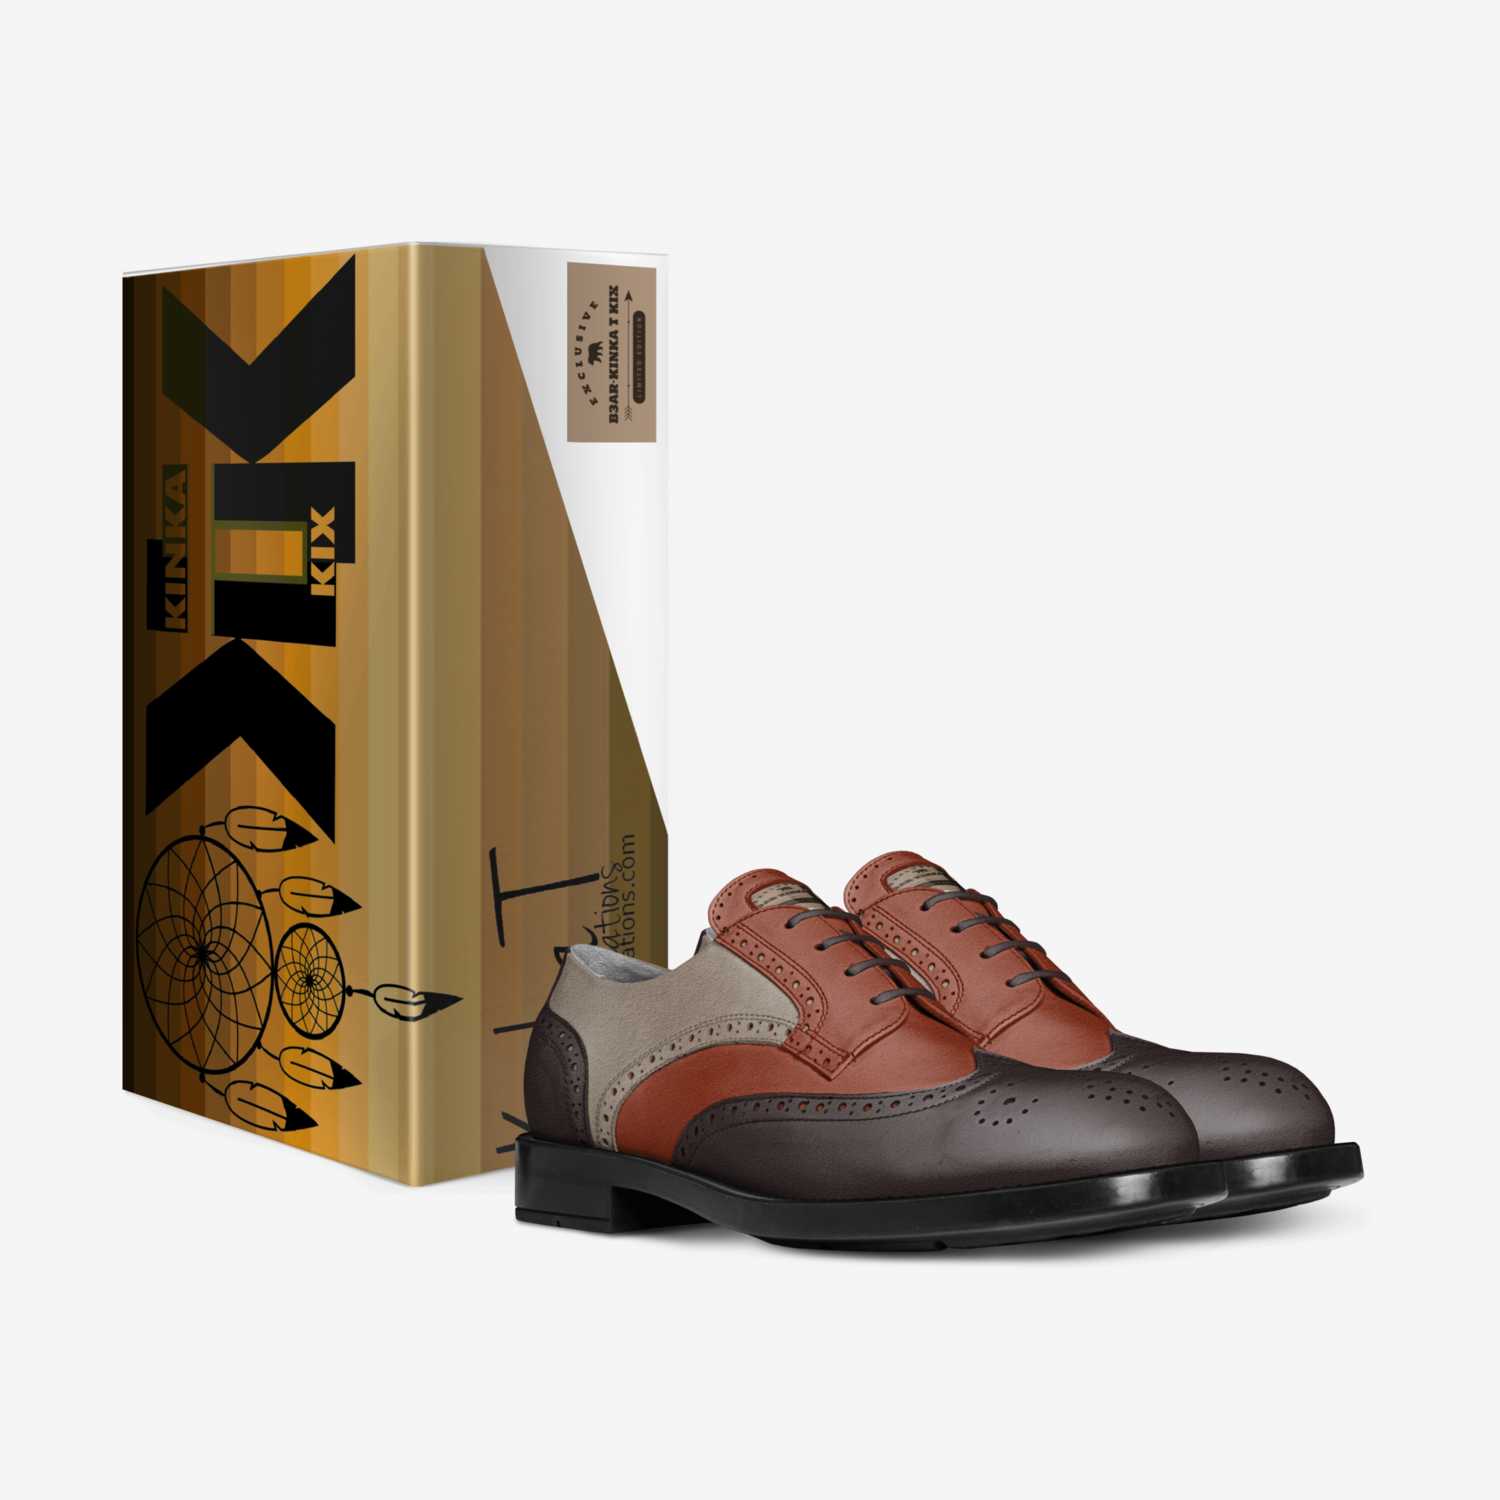 B3AR-Kinka T Kix custom made in Italy shoes by Kinka T Kix | Box view